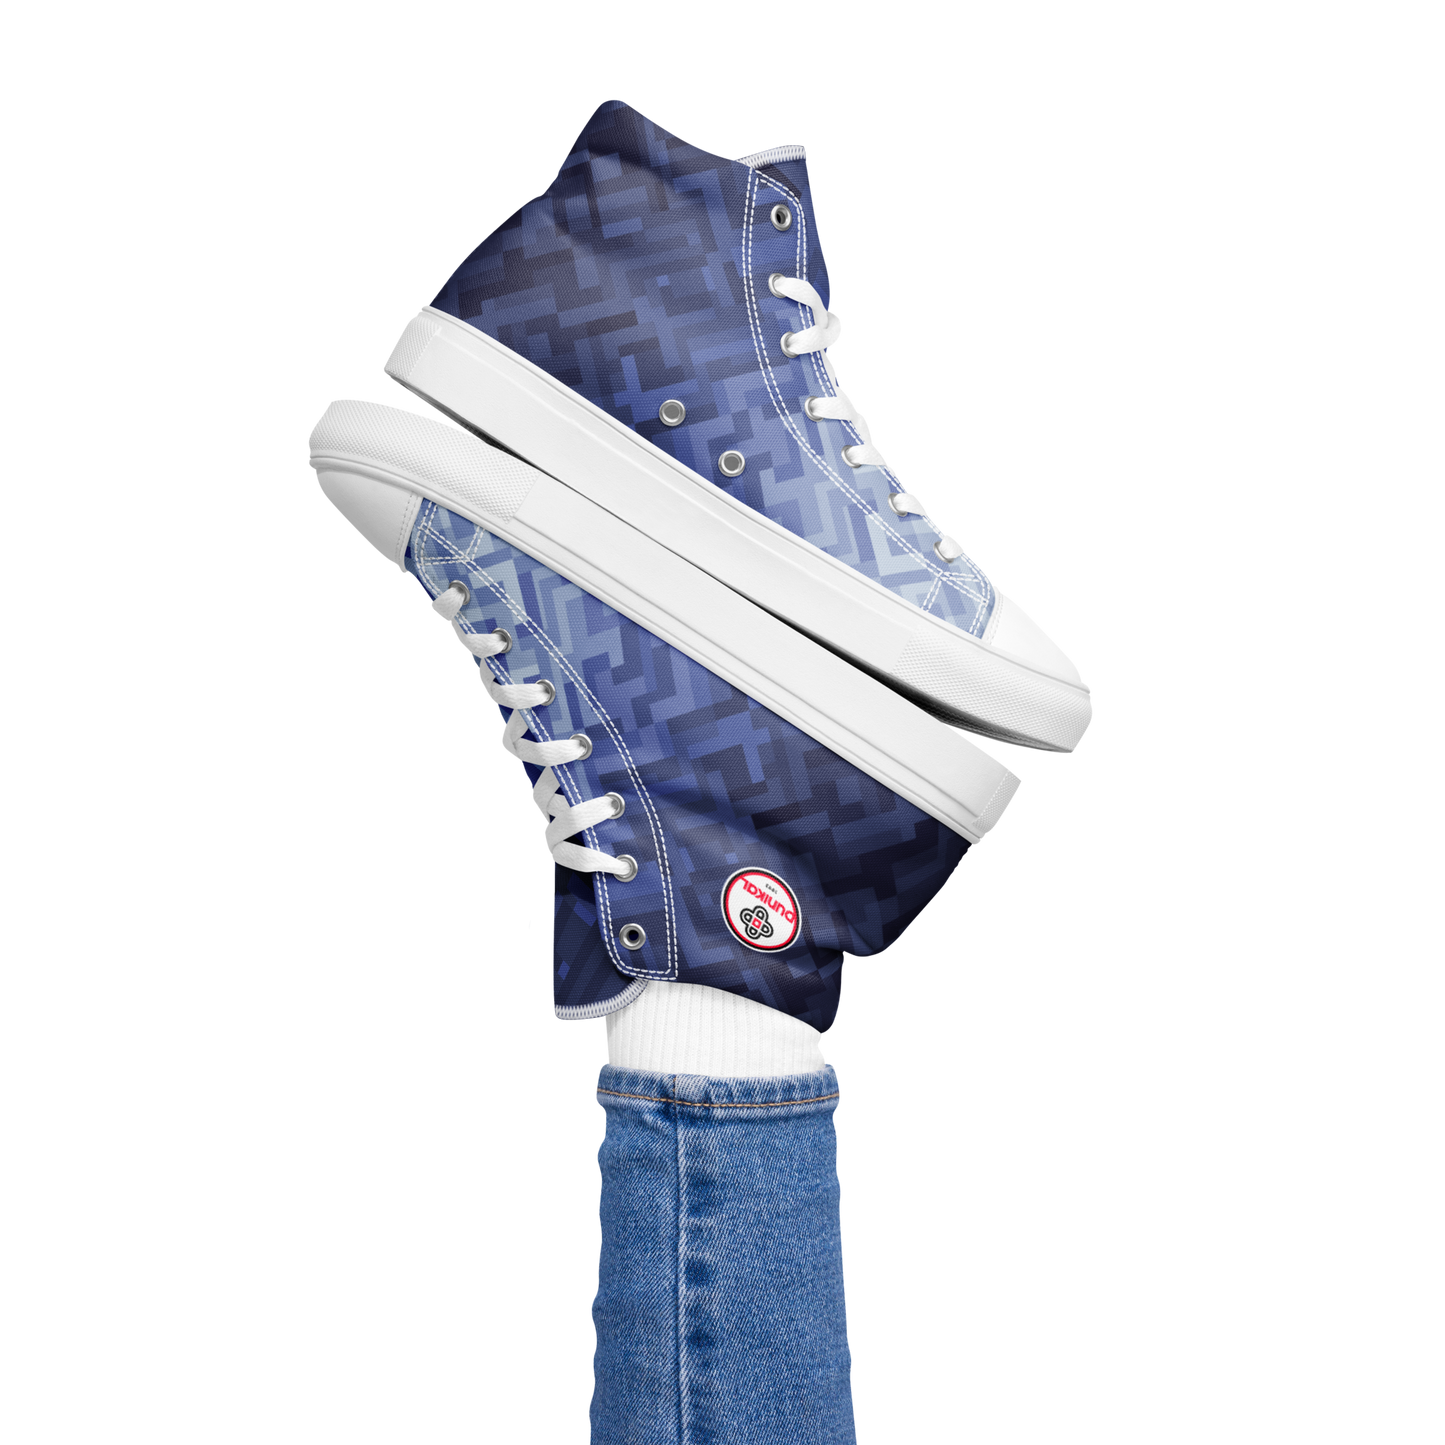 Women's Canvas Sneakers ❯ Polygonal Gradient ❯ Liberty Blue